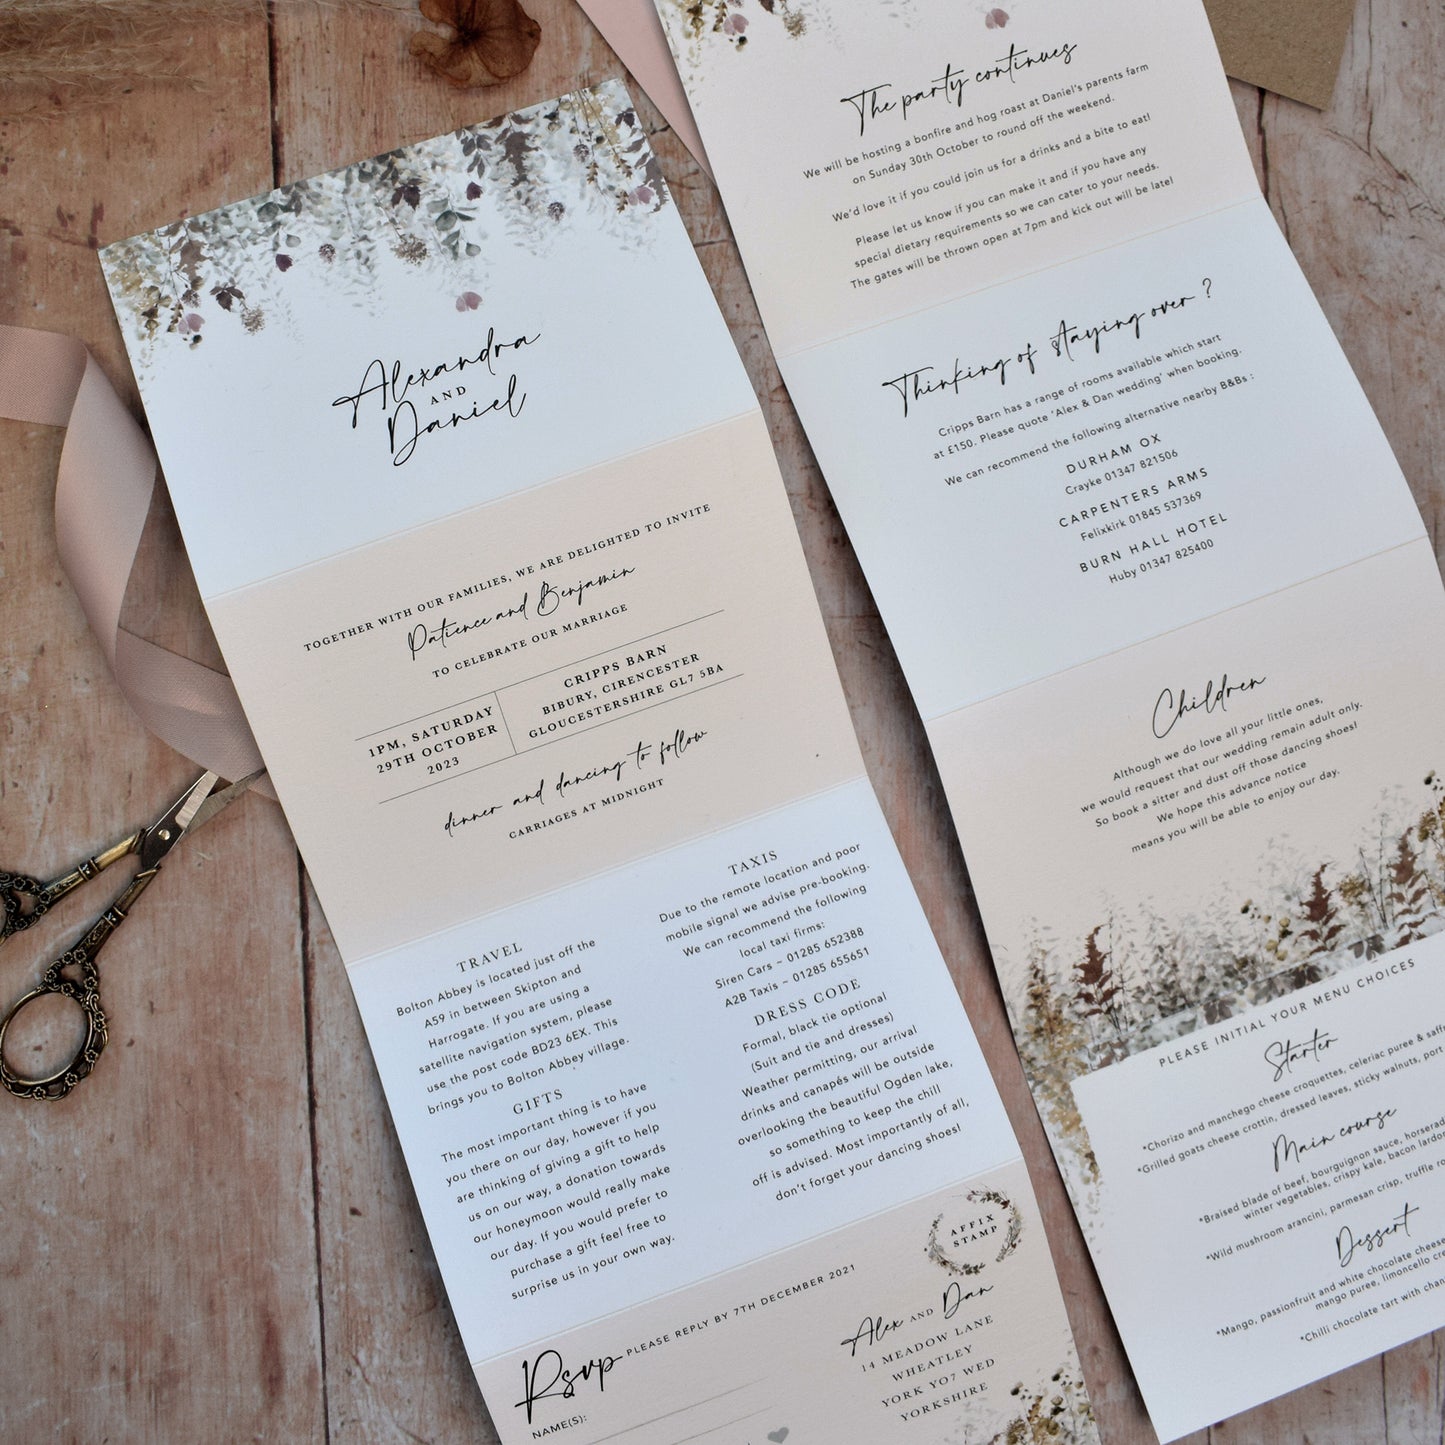 Concertina wedding invitations for an Autumn wedding